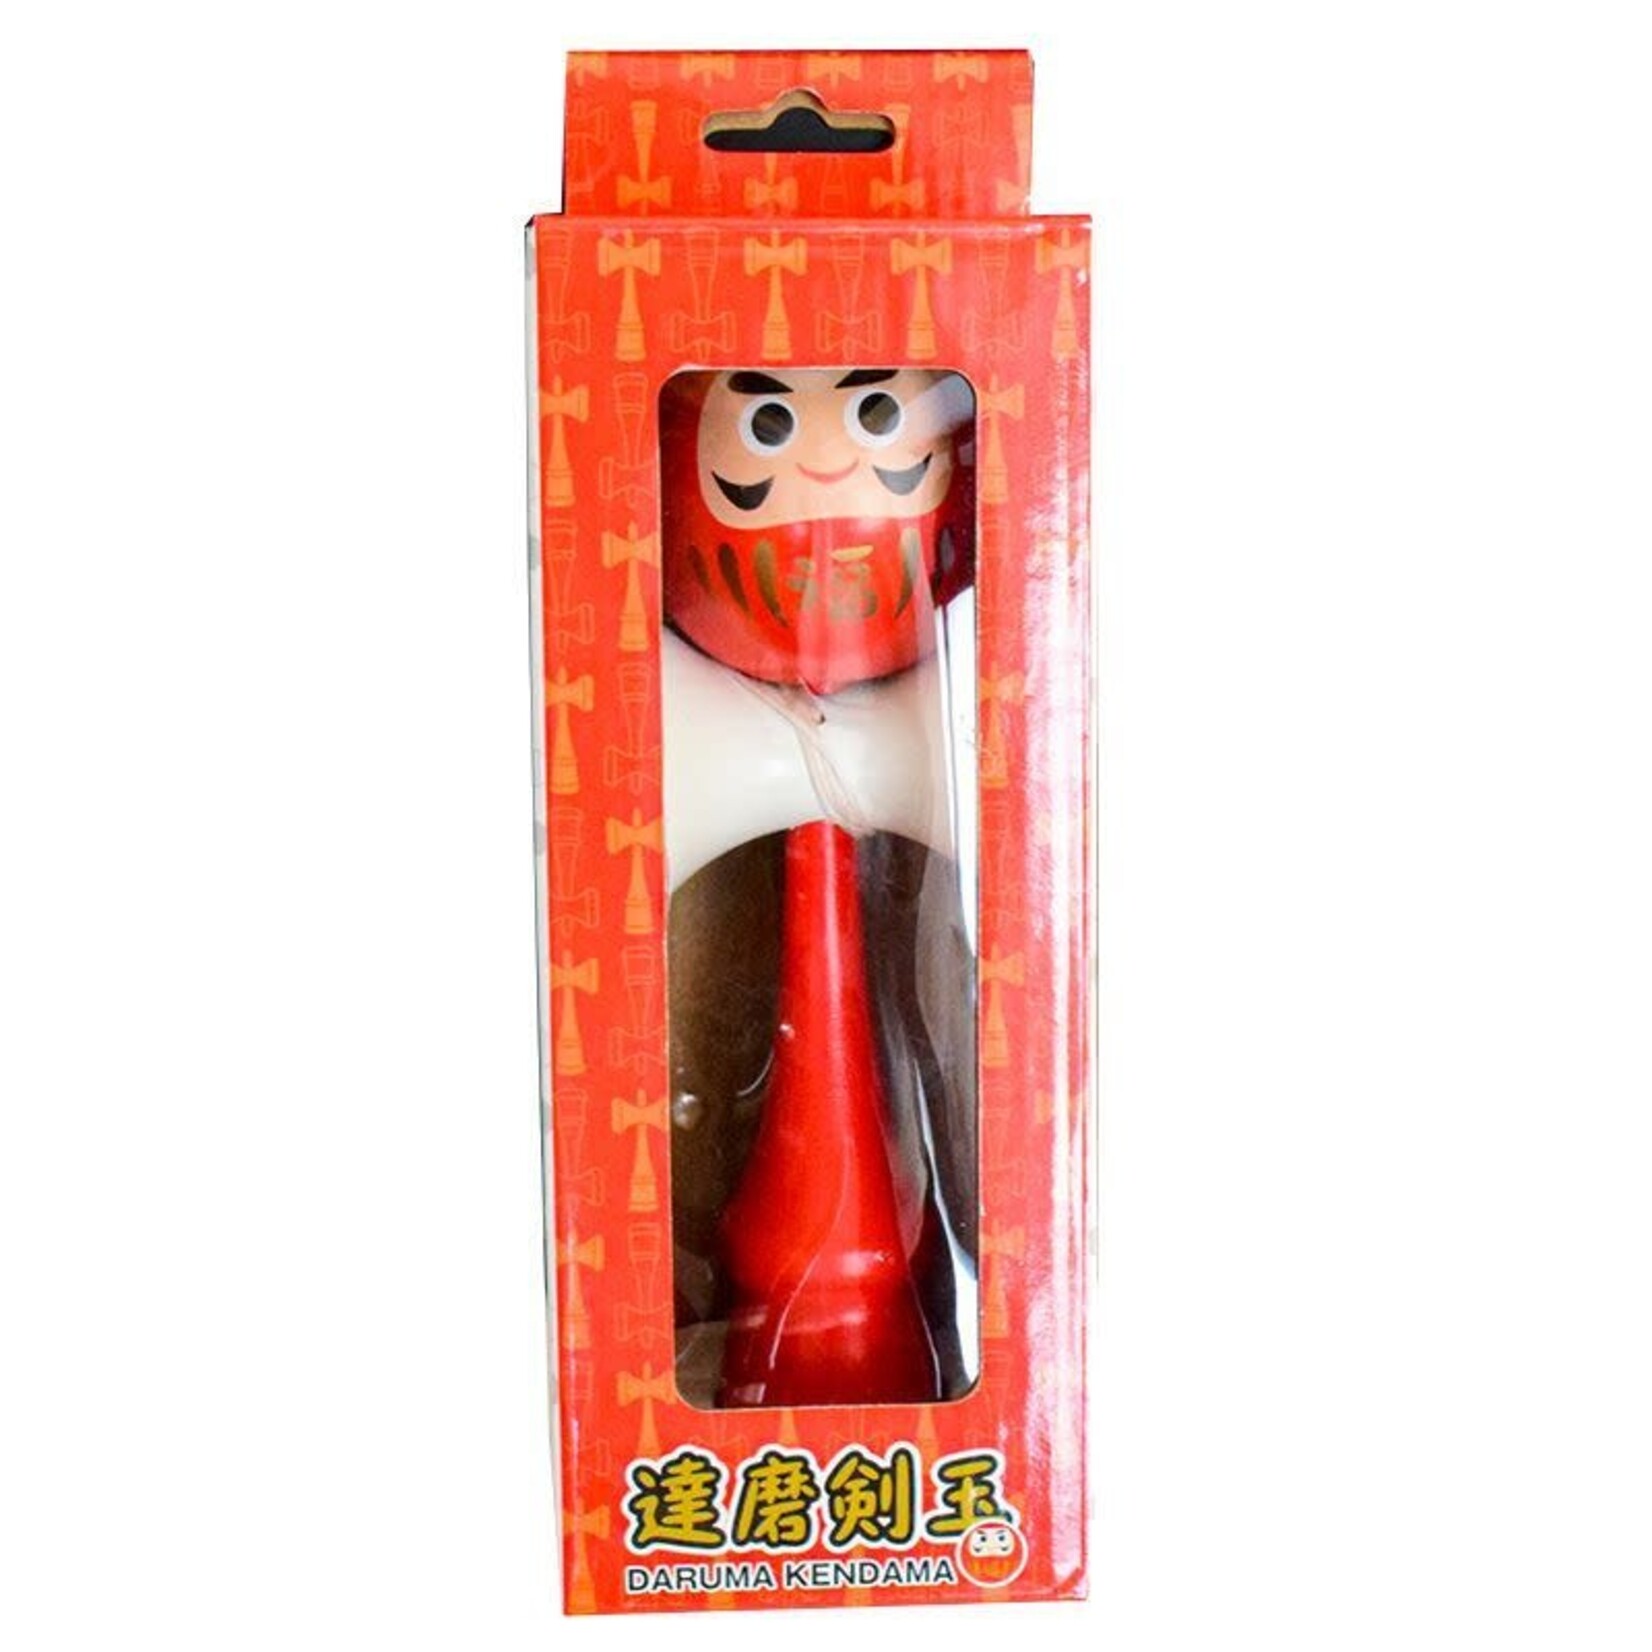 Red Daruma Kendama (Cup & Ball Toy) - 6"